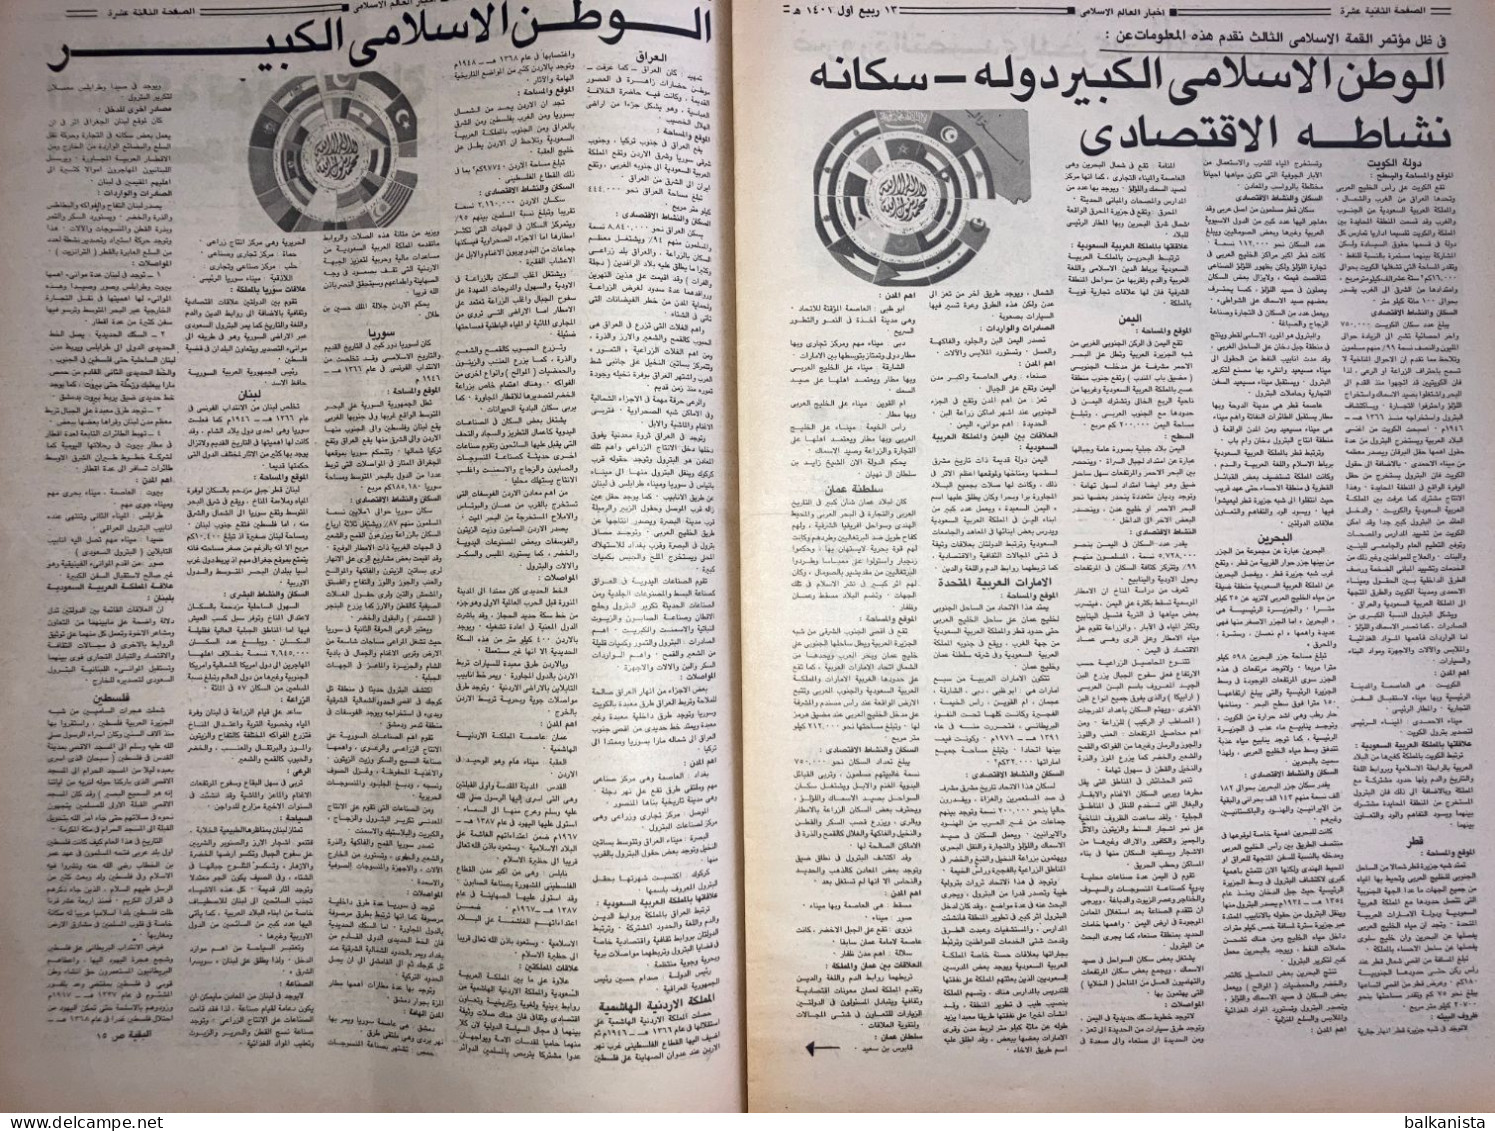 Saudi Arabia  Akhbar al-Alam al-Islami Newspaper 17 January 1981